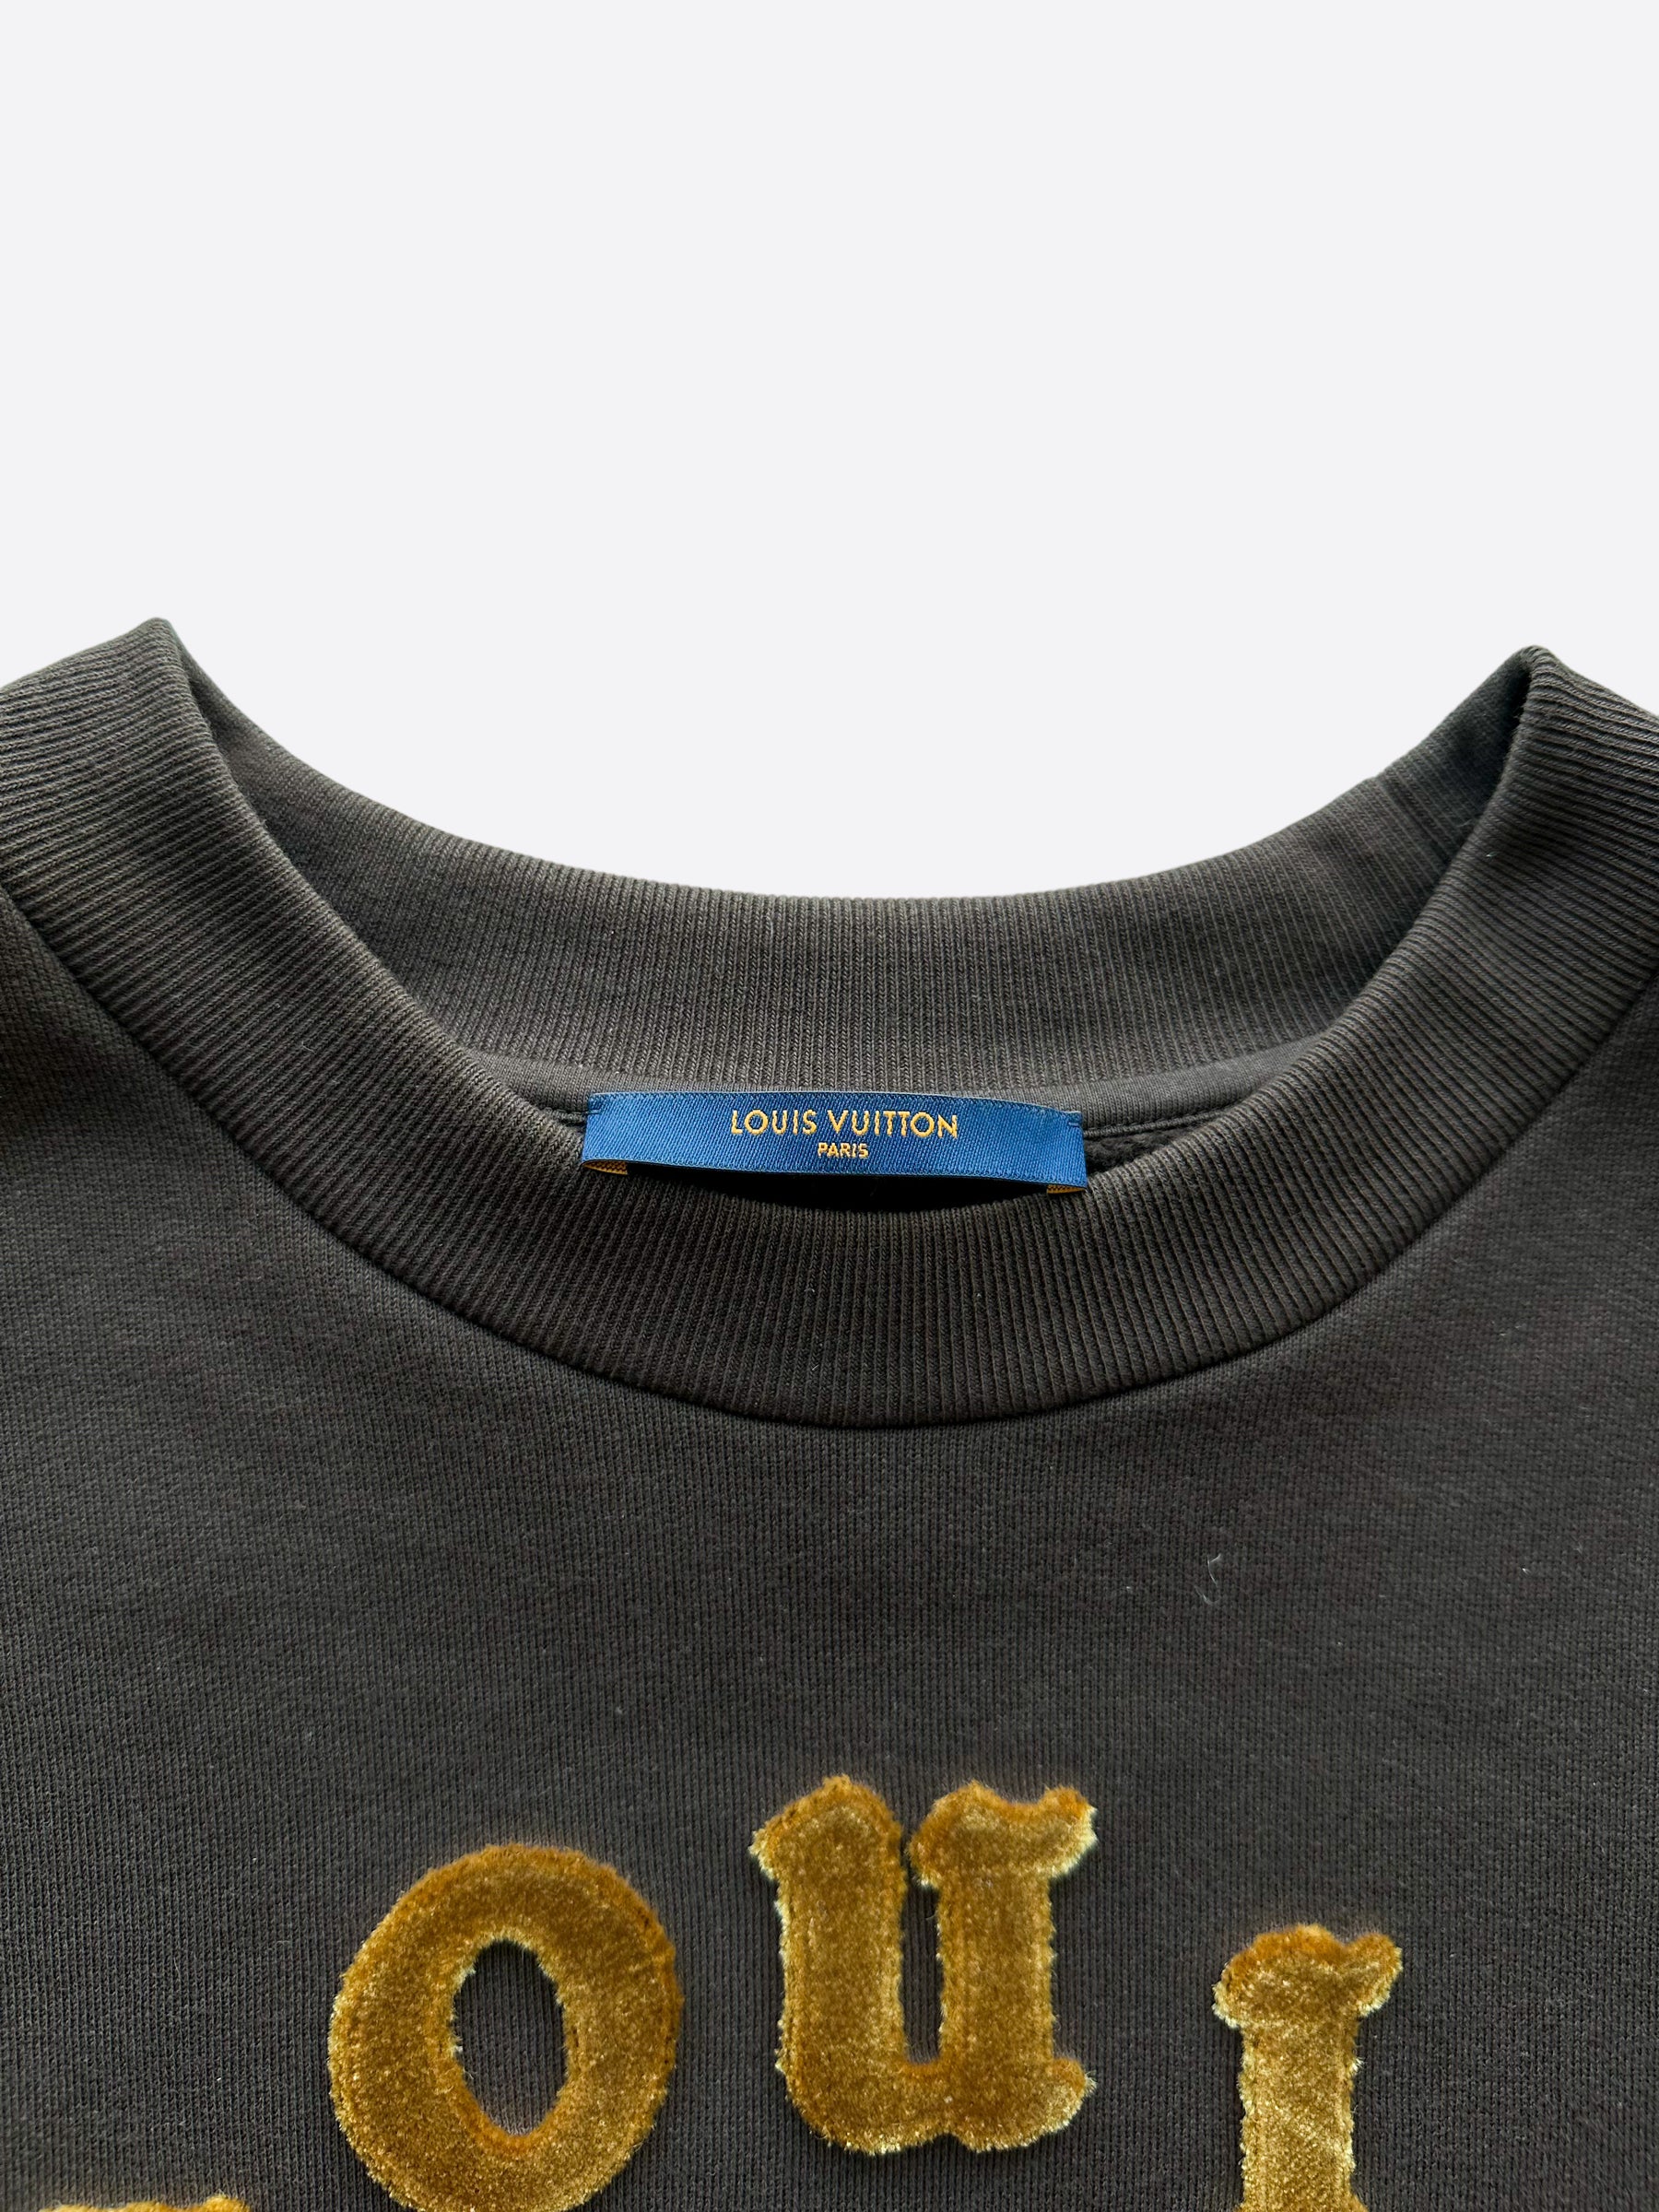 Louis Vuitton Men Sweater Taupe Cream amp Blue L Sleeve Rib Knit Crew XXL   eBay